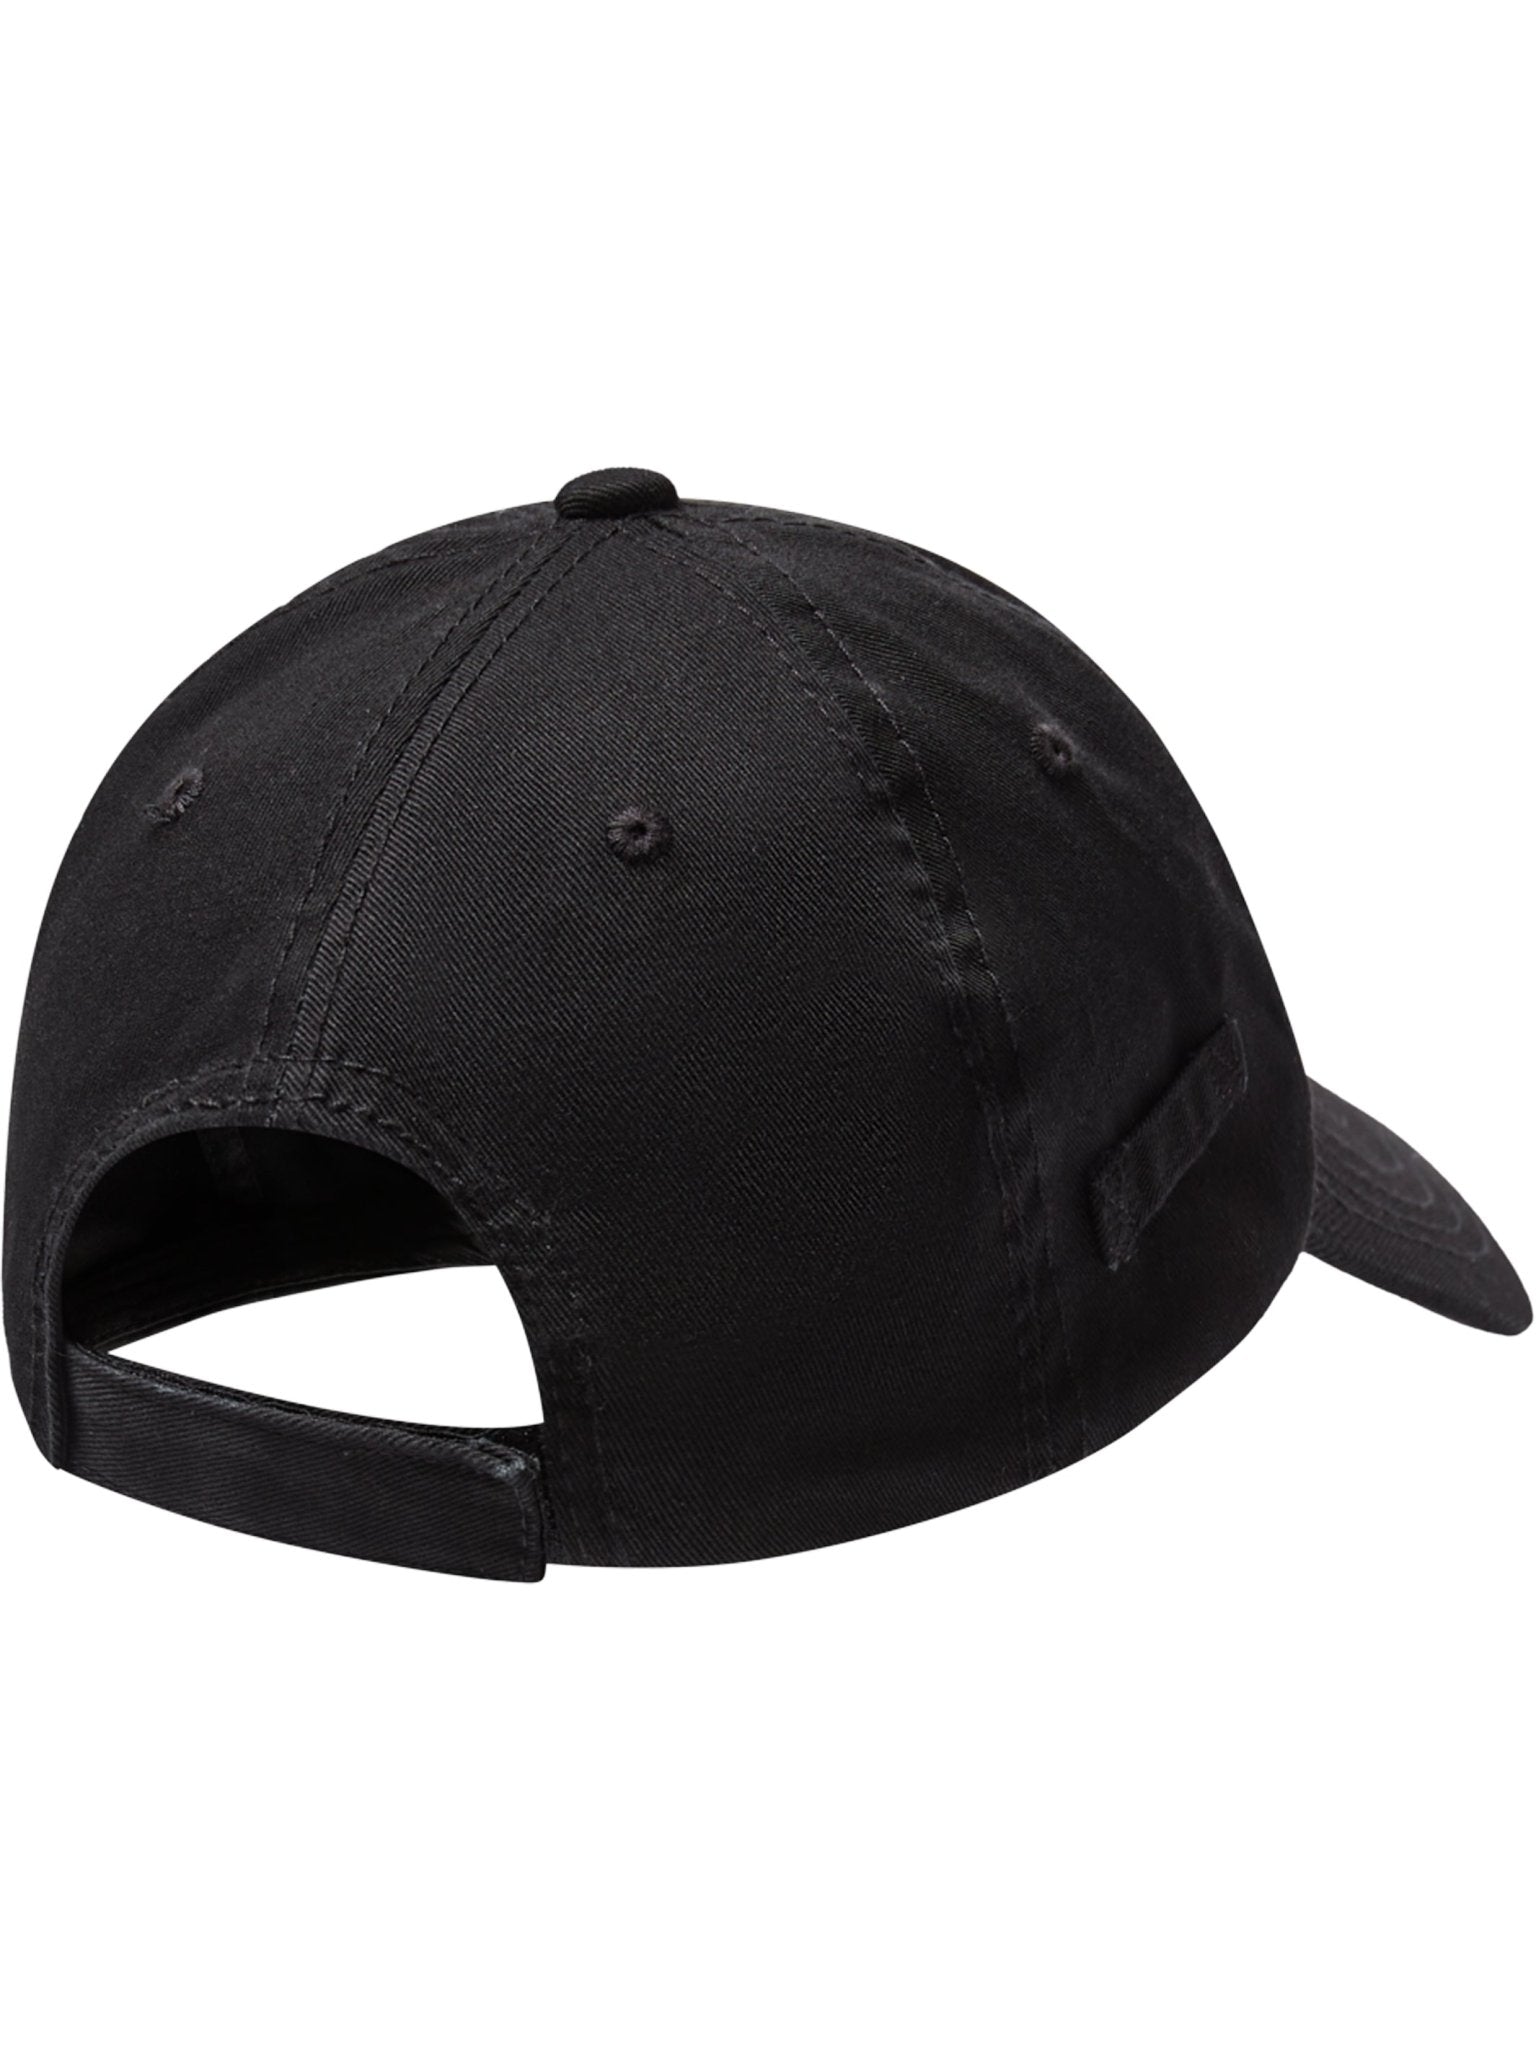 4elementsclothingDeerhunterDeerhunter - Balaton Shield Cap - Adult adjustable Baseball Cap / peaked cap / hatHats6091-999